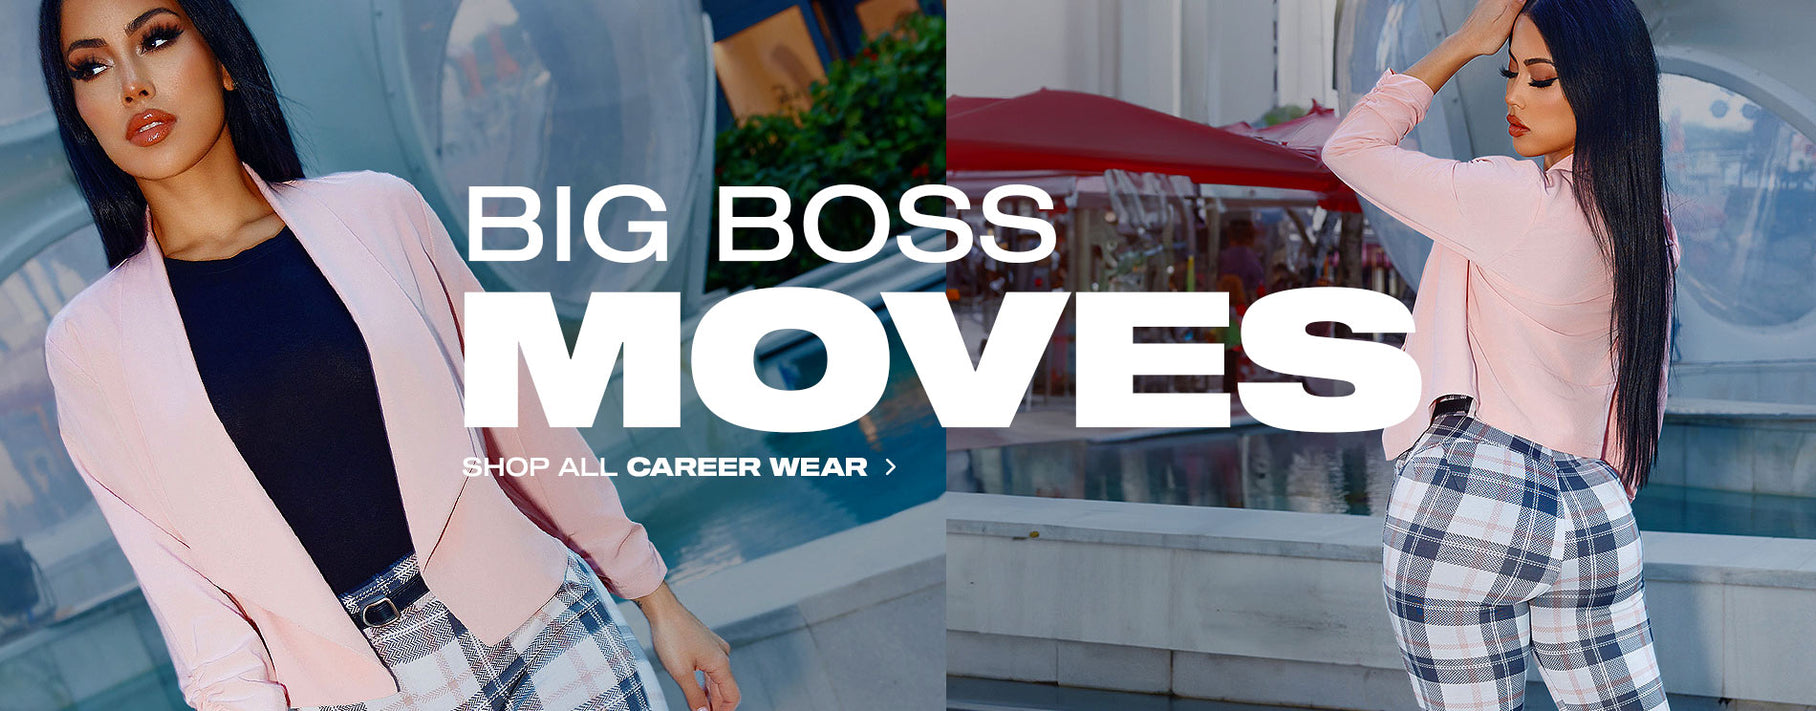 Big Boss Moves: Shop All Career Wear